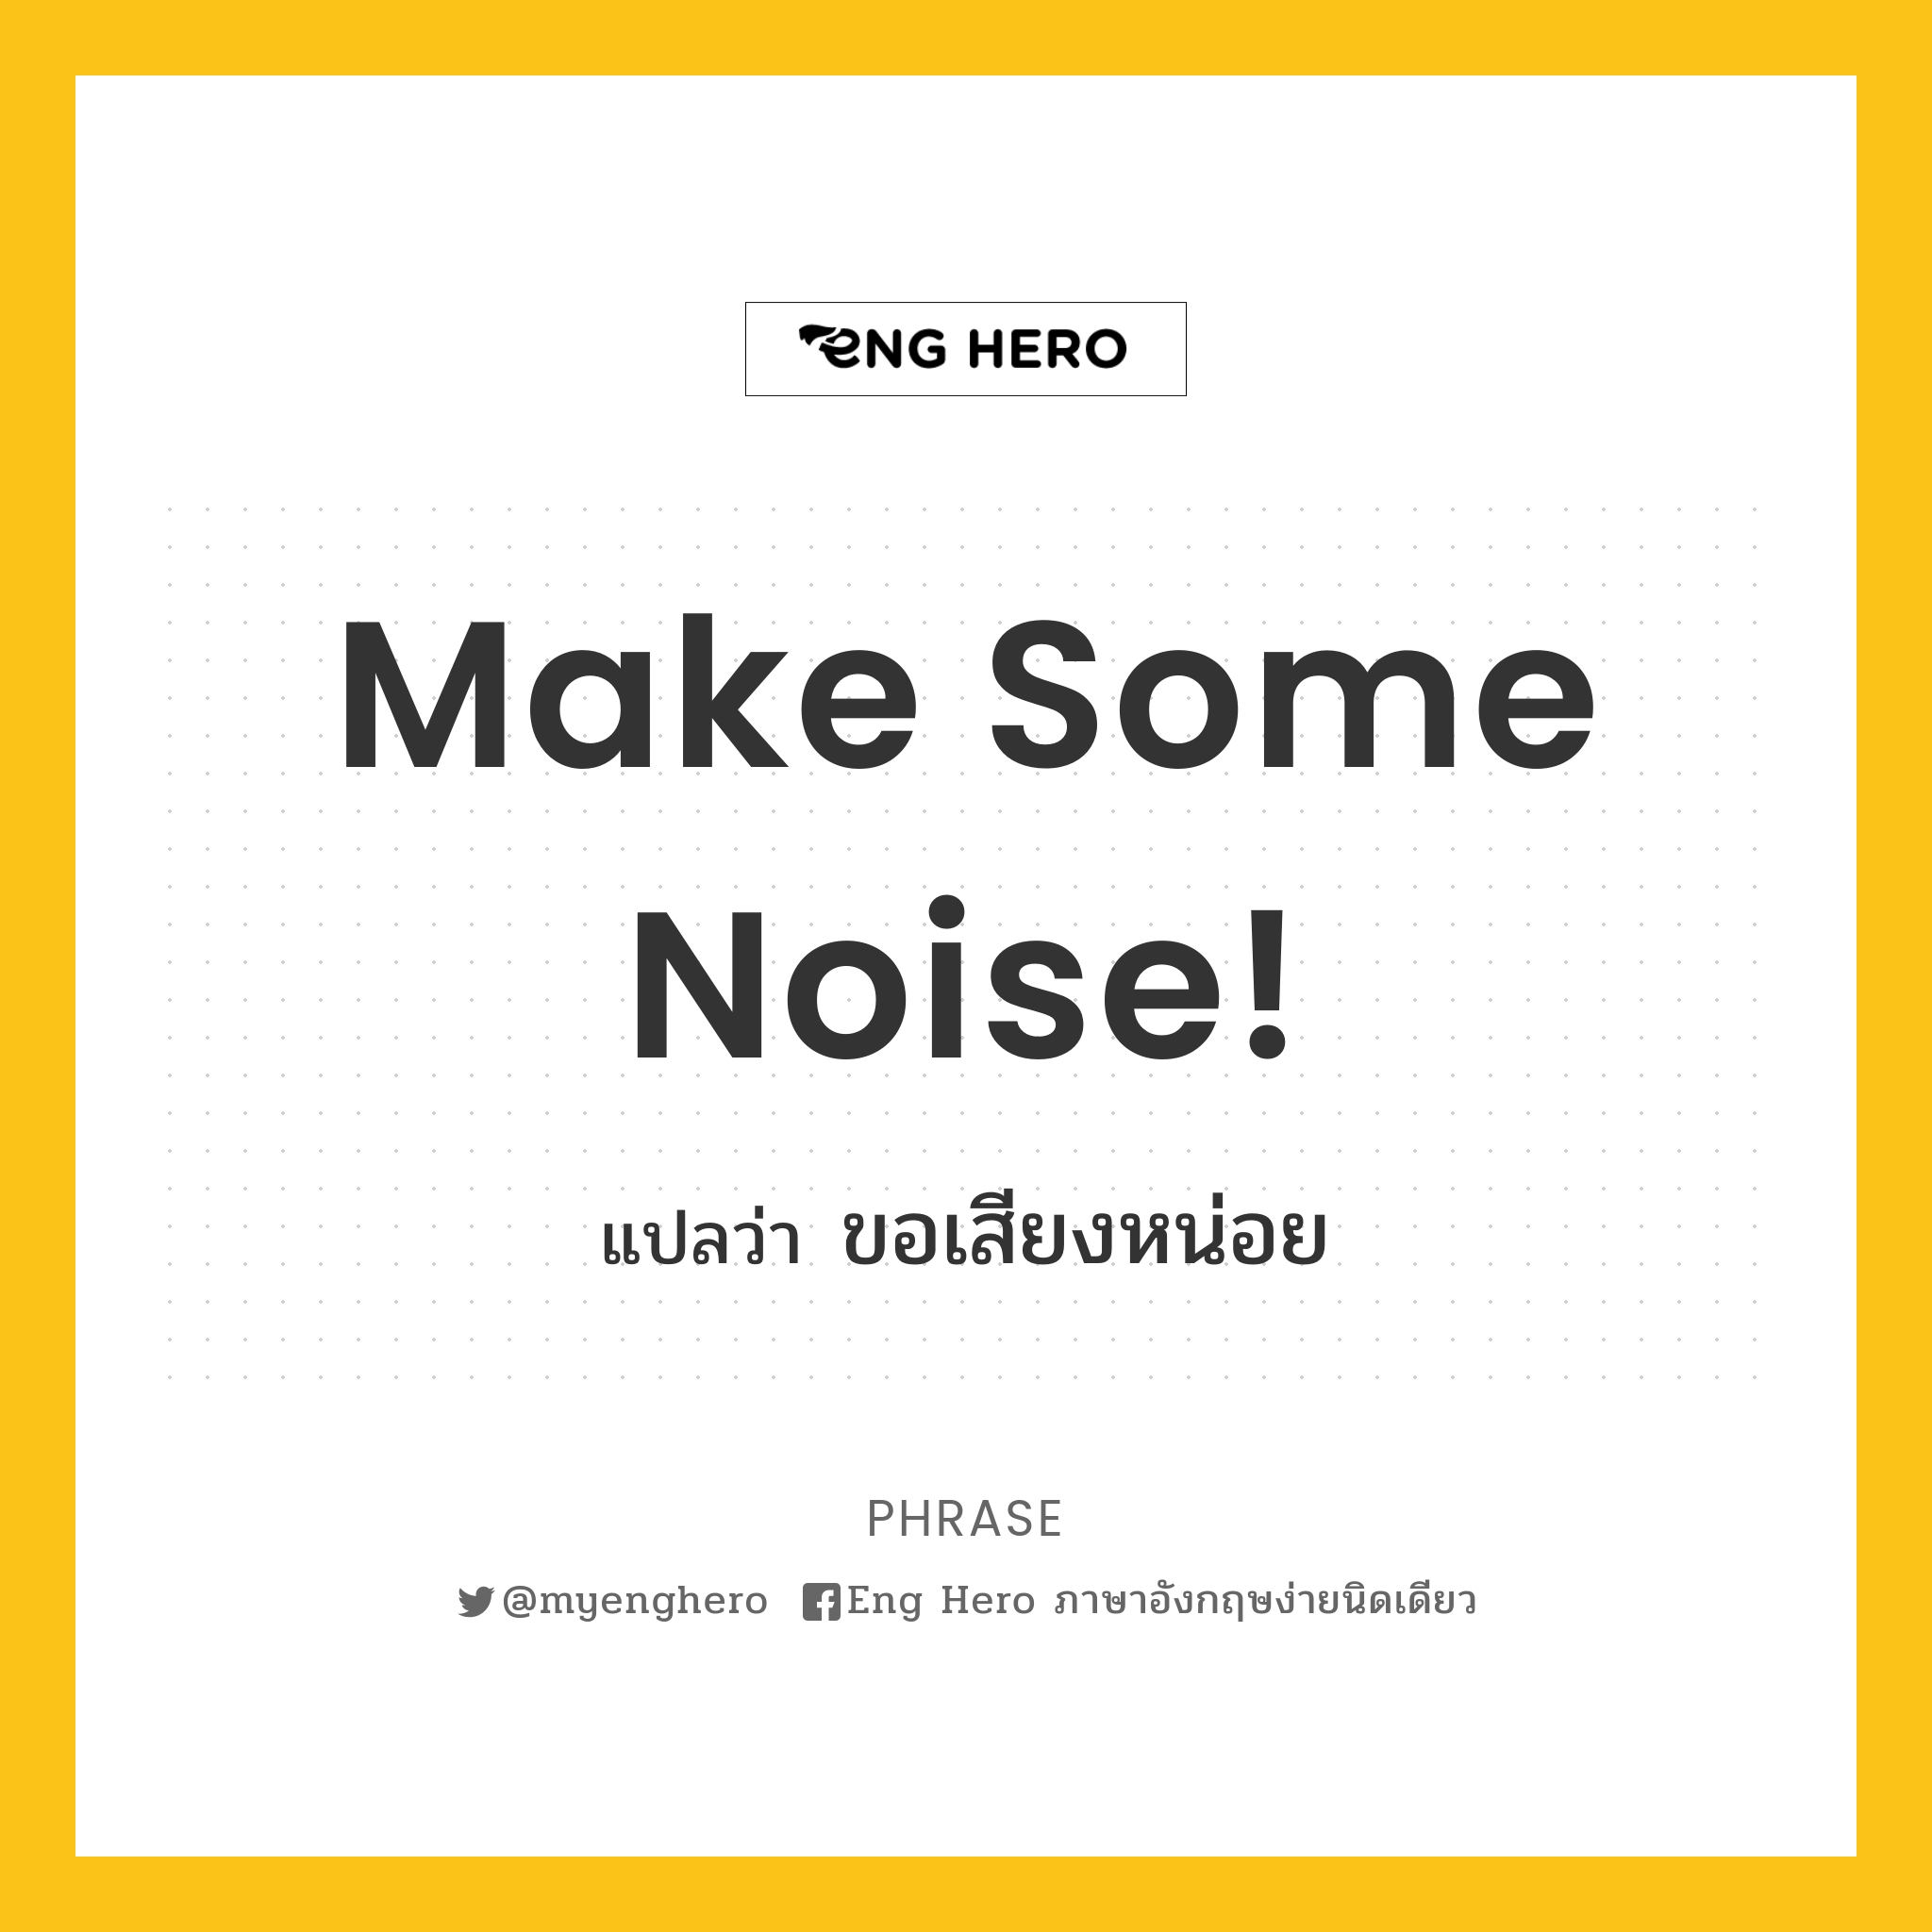 Make some noise!